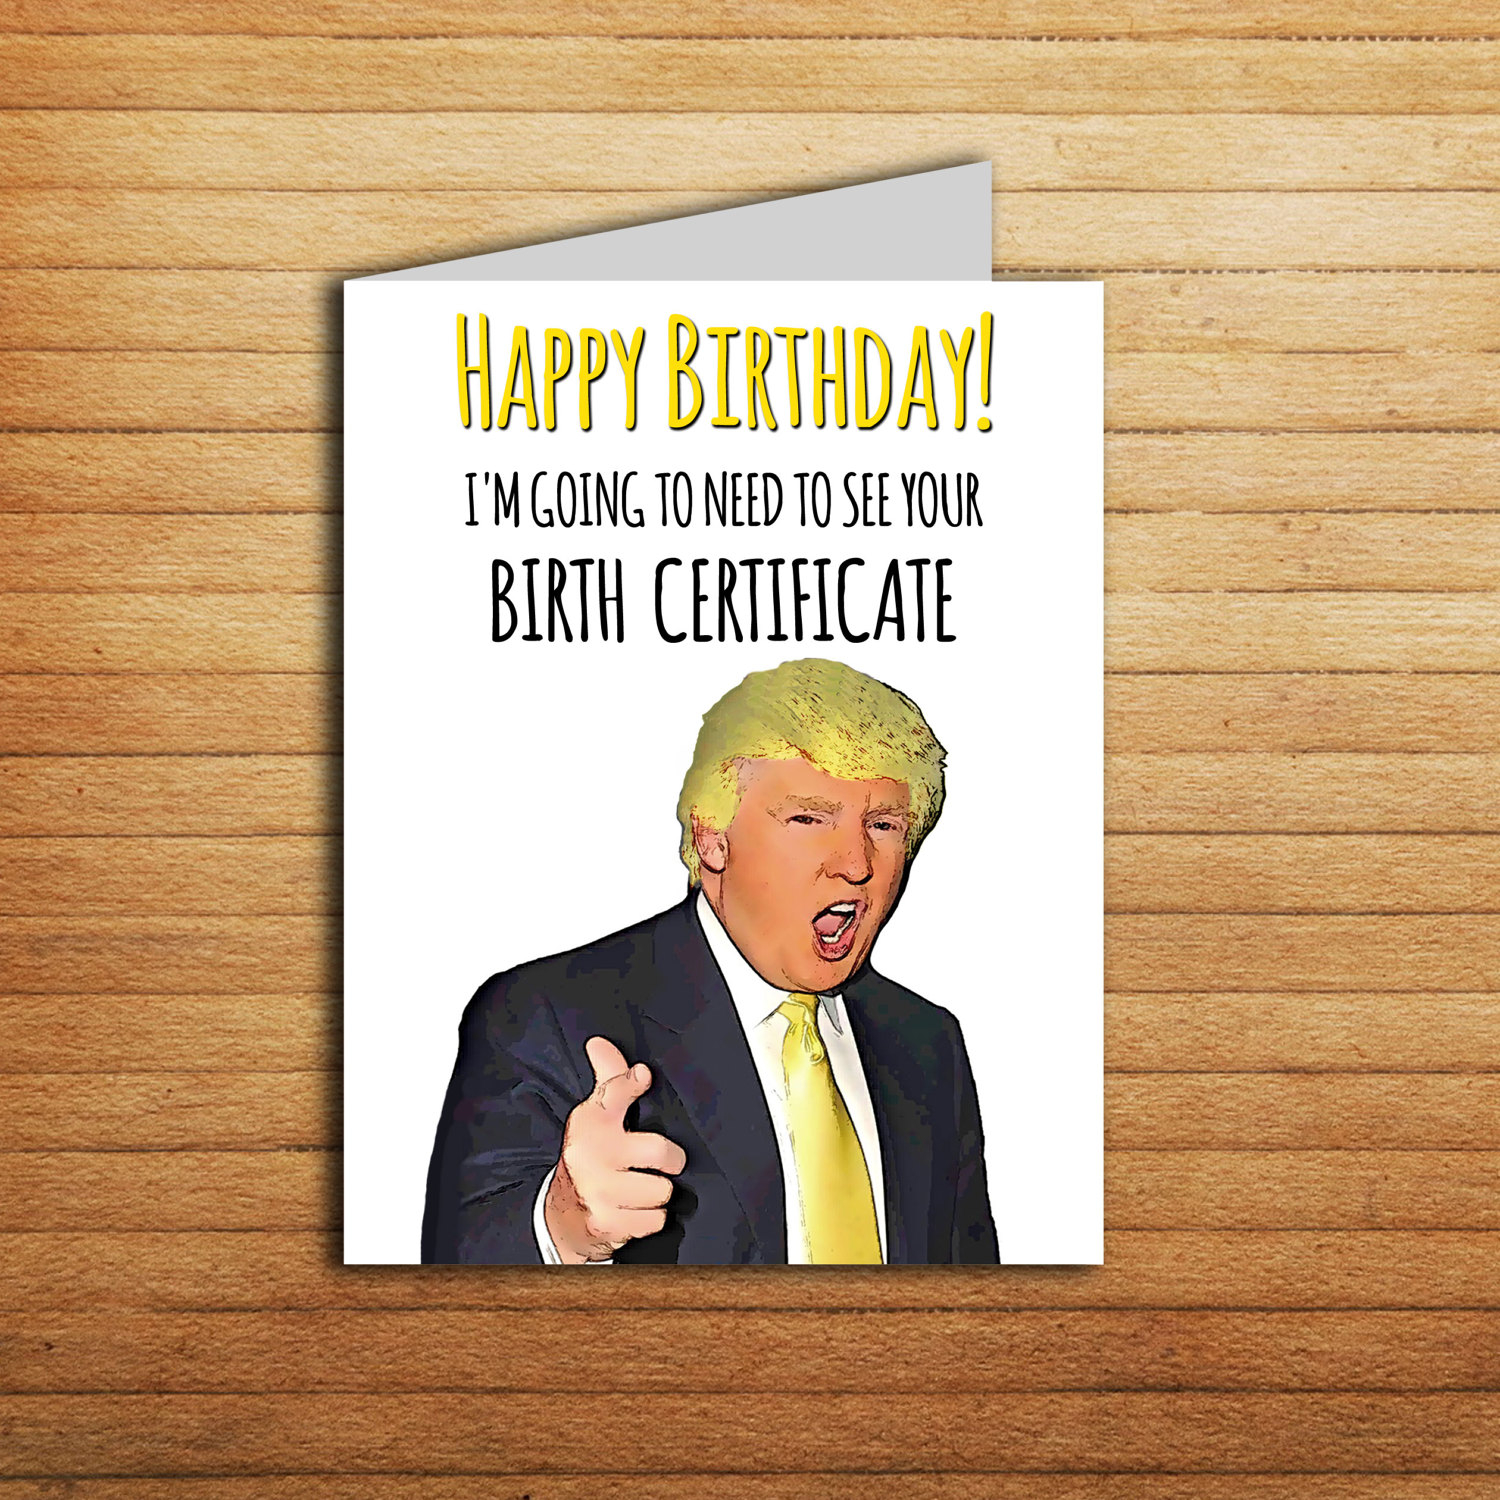 Birthday Card Ideas For Best Friend Funny Donald Trump Card Birth Certificate Birthday Card Printable Funny Card For Boyfriend Gift For Best Friend 40th Birthday 30 Bday Pop Culture